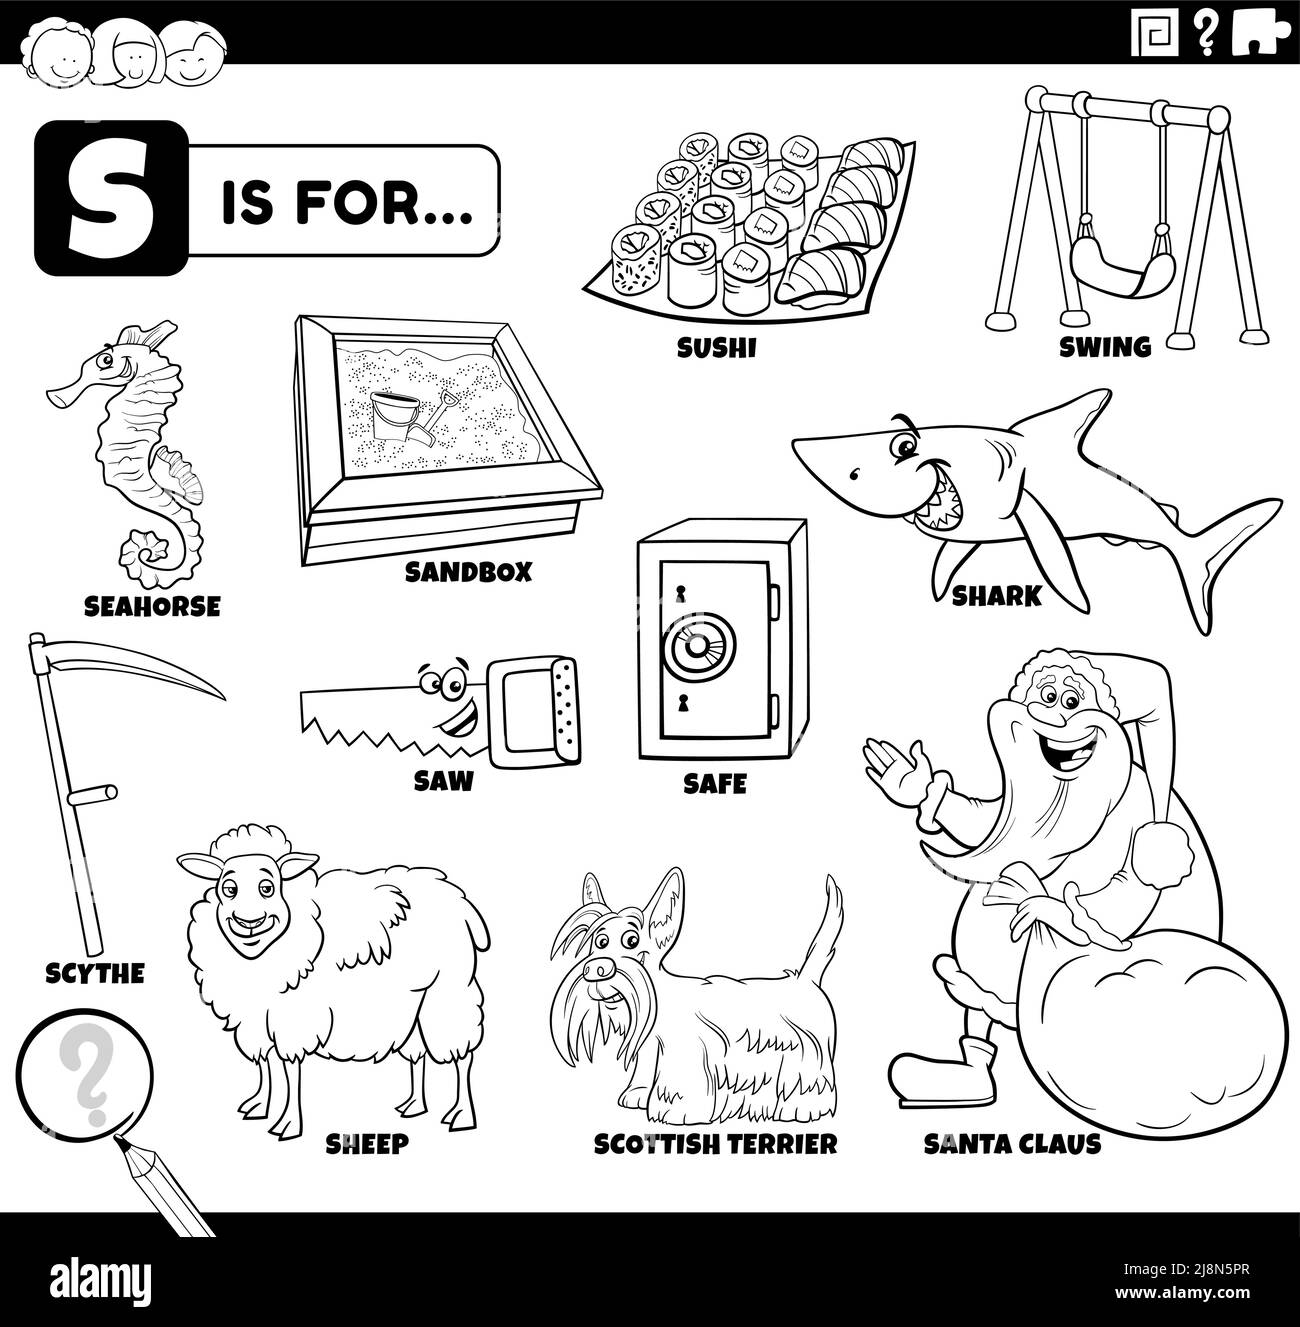 Cartoon school objects coloring page Immagini Vettoriali Stock - Pagina 2 -  Alamy